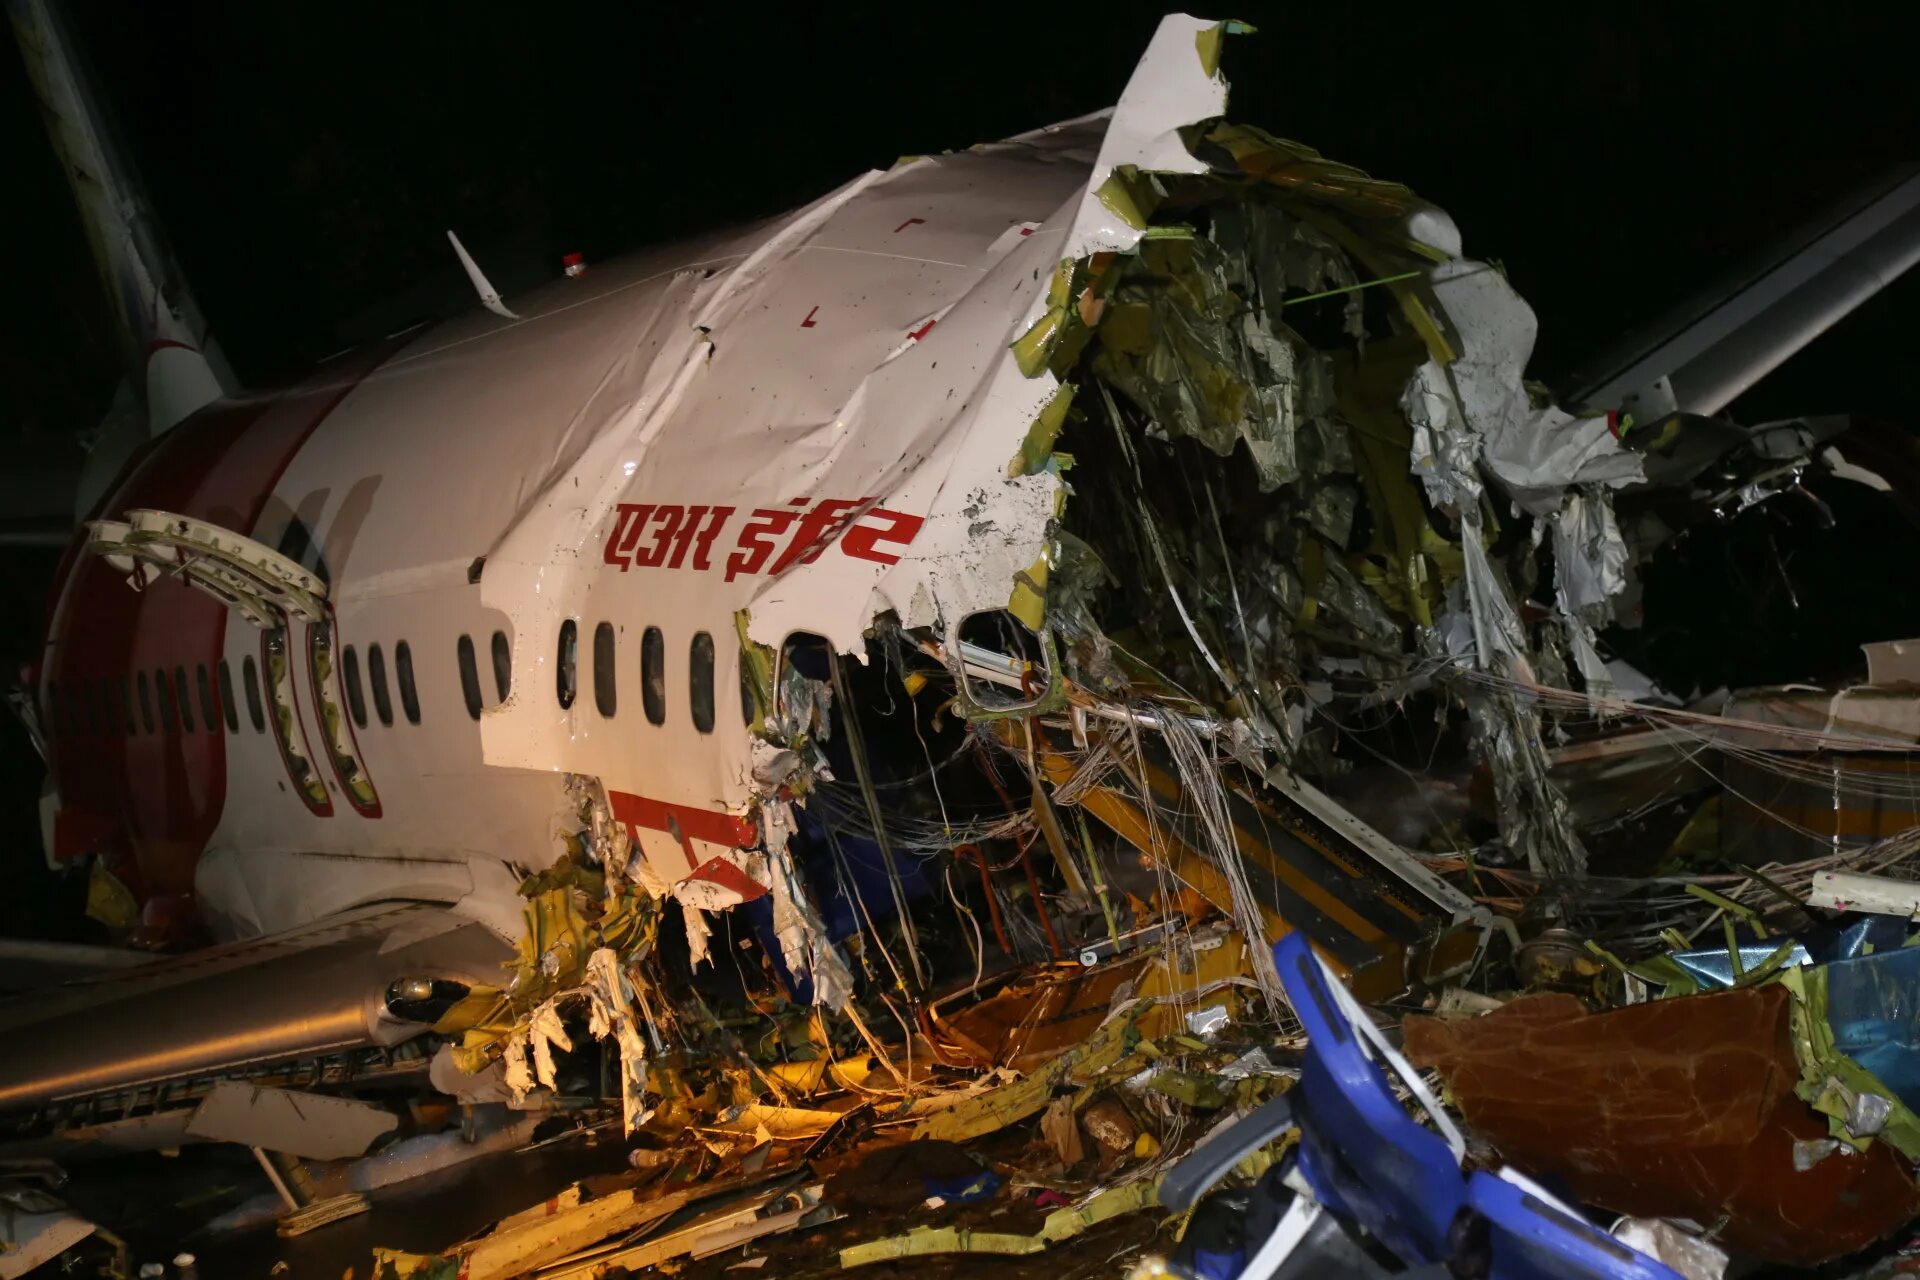 Boeing 747 Air India катастрофа. Боинг 747 АИР Индия теракт. Авиакатастрофа 6